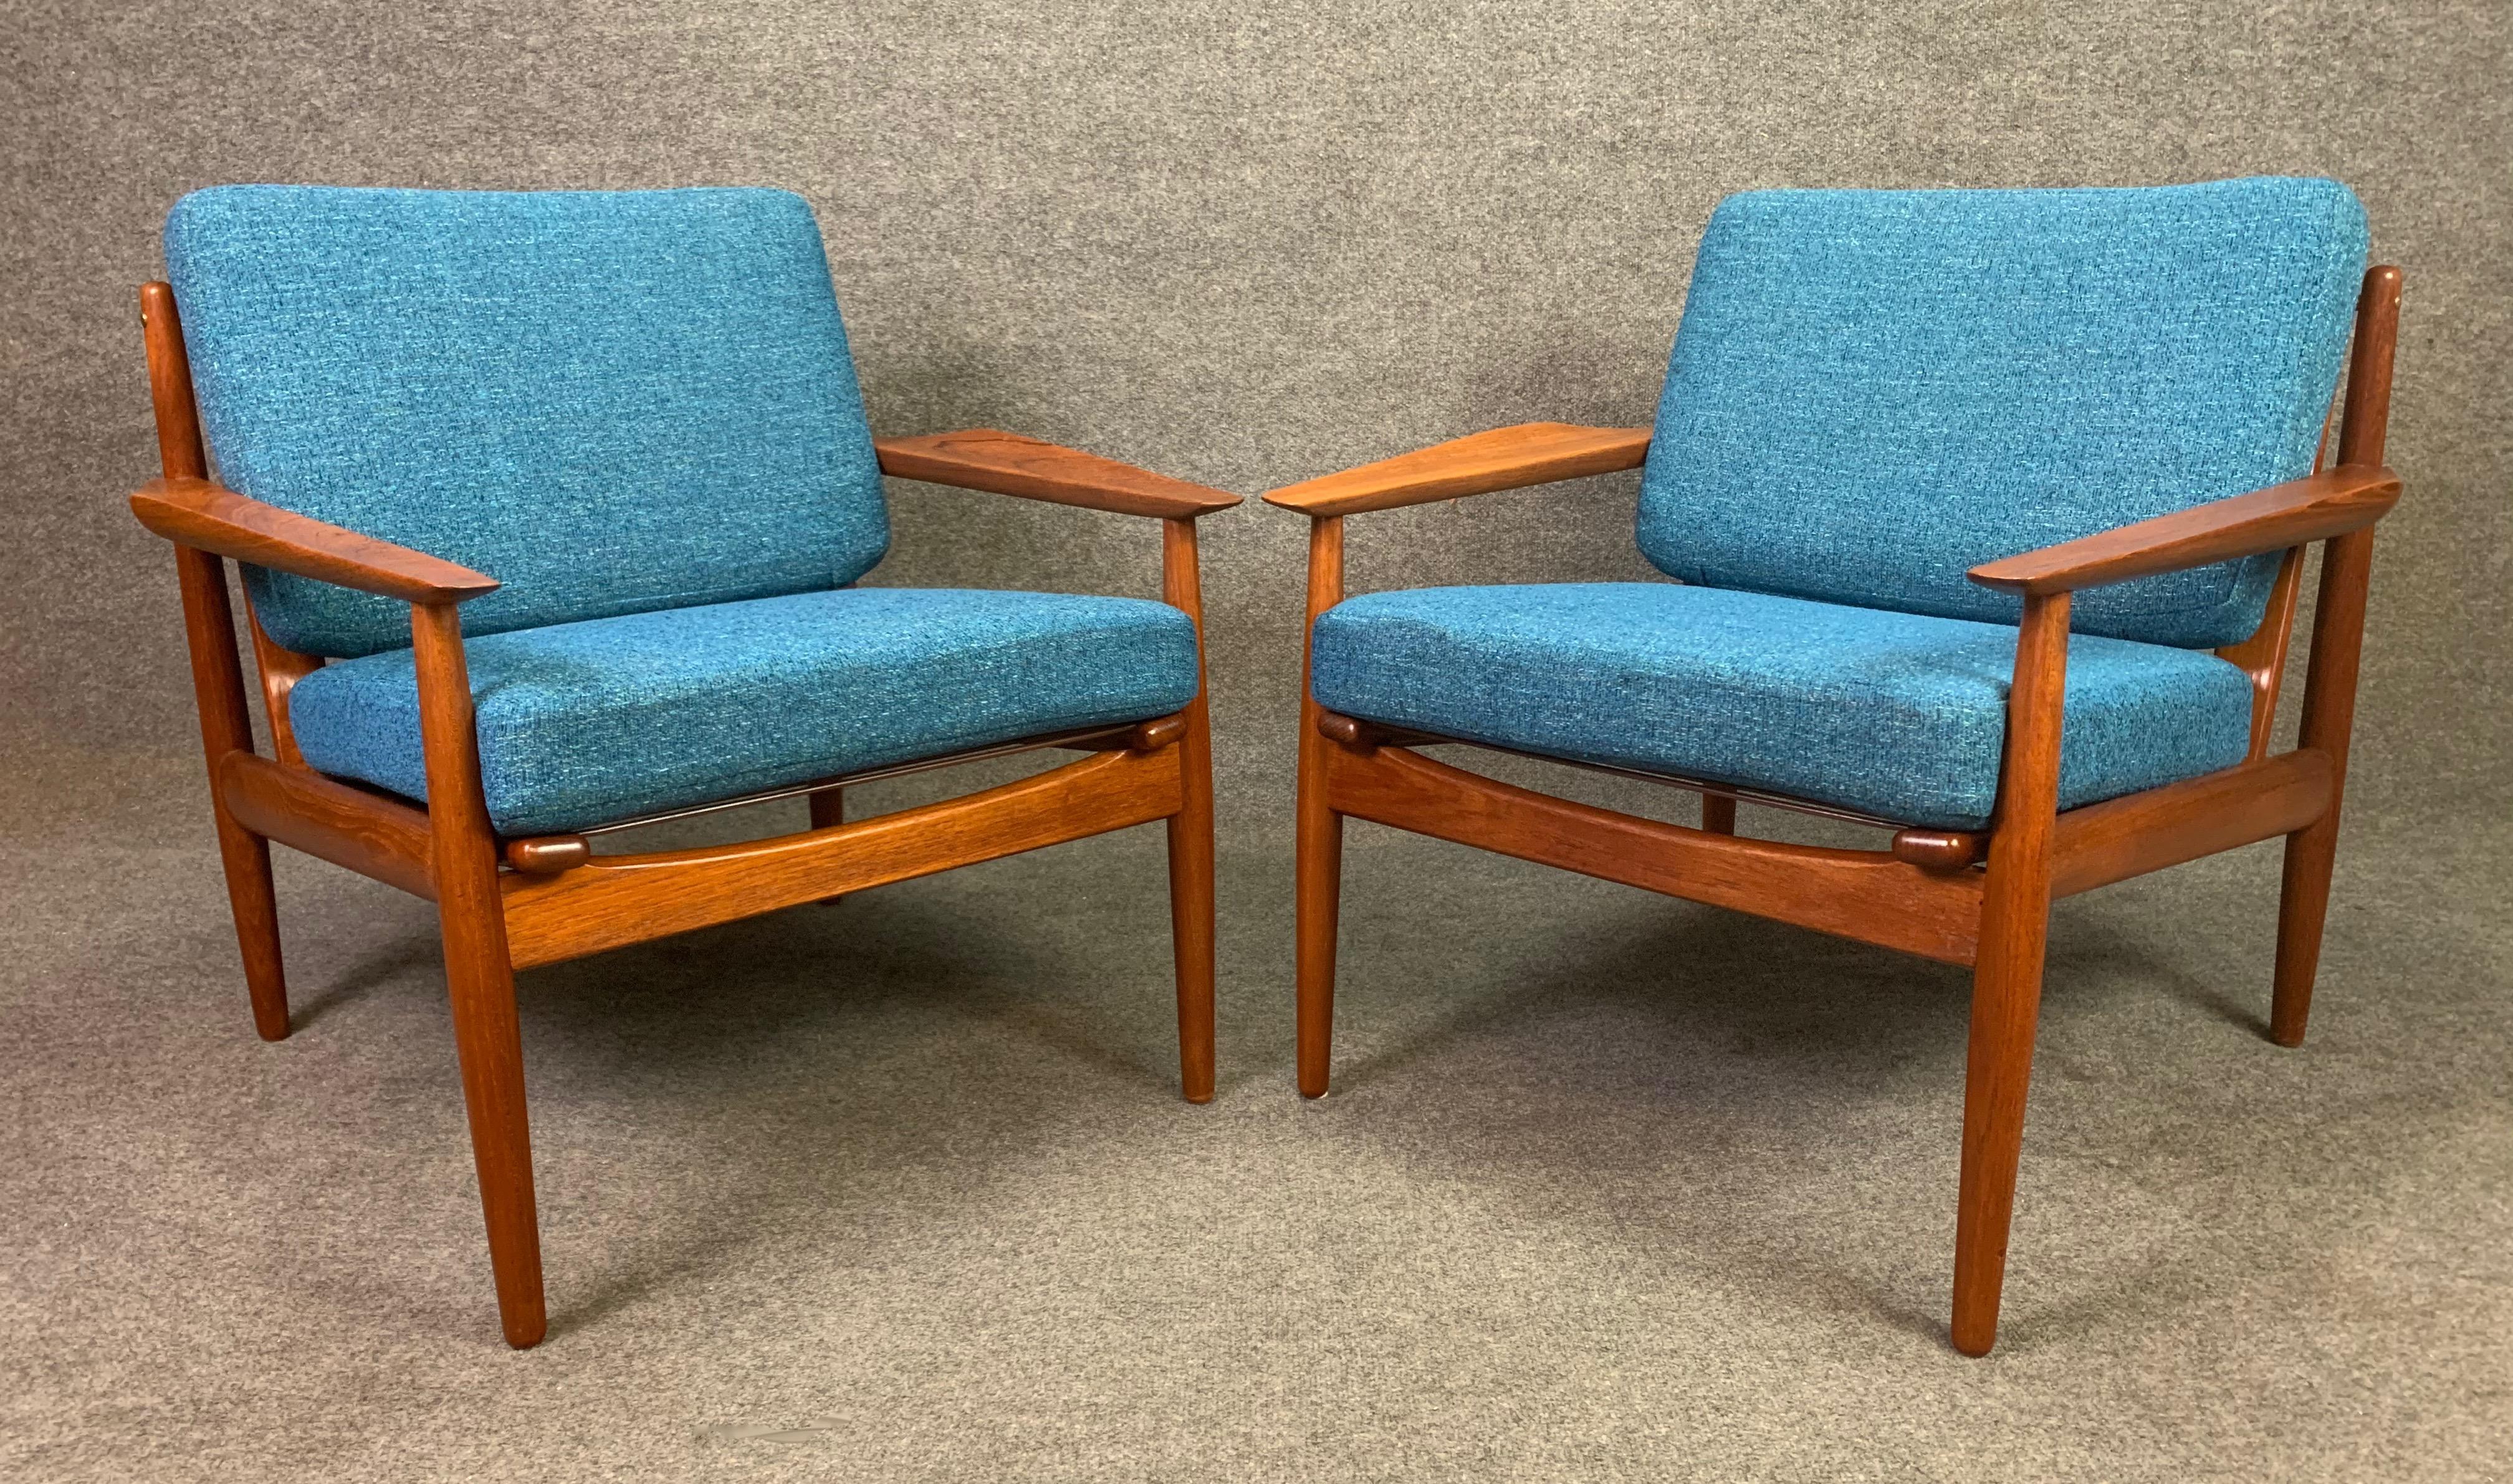 Mid-20th Century Pair of Vintage Danish Midcentury Teak Easy Chairs by Arne Vodder for Glostrup